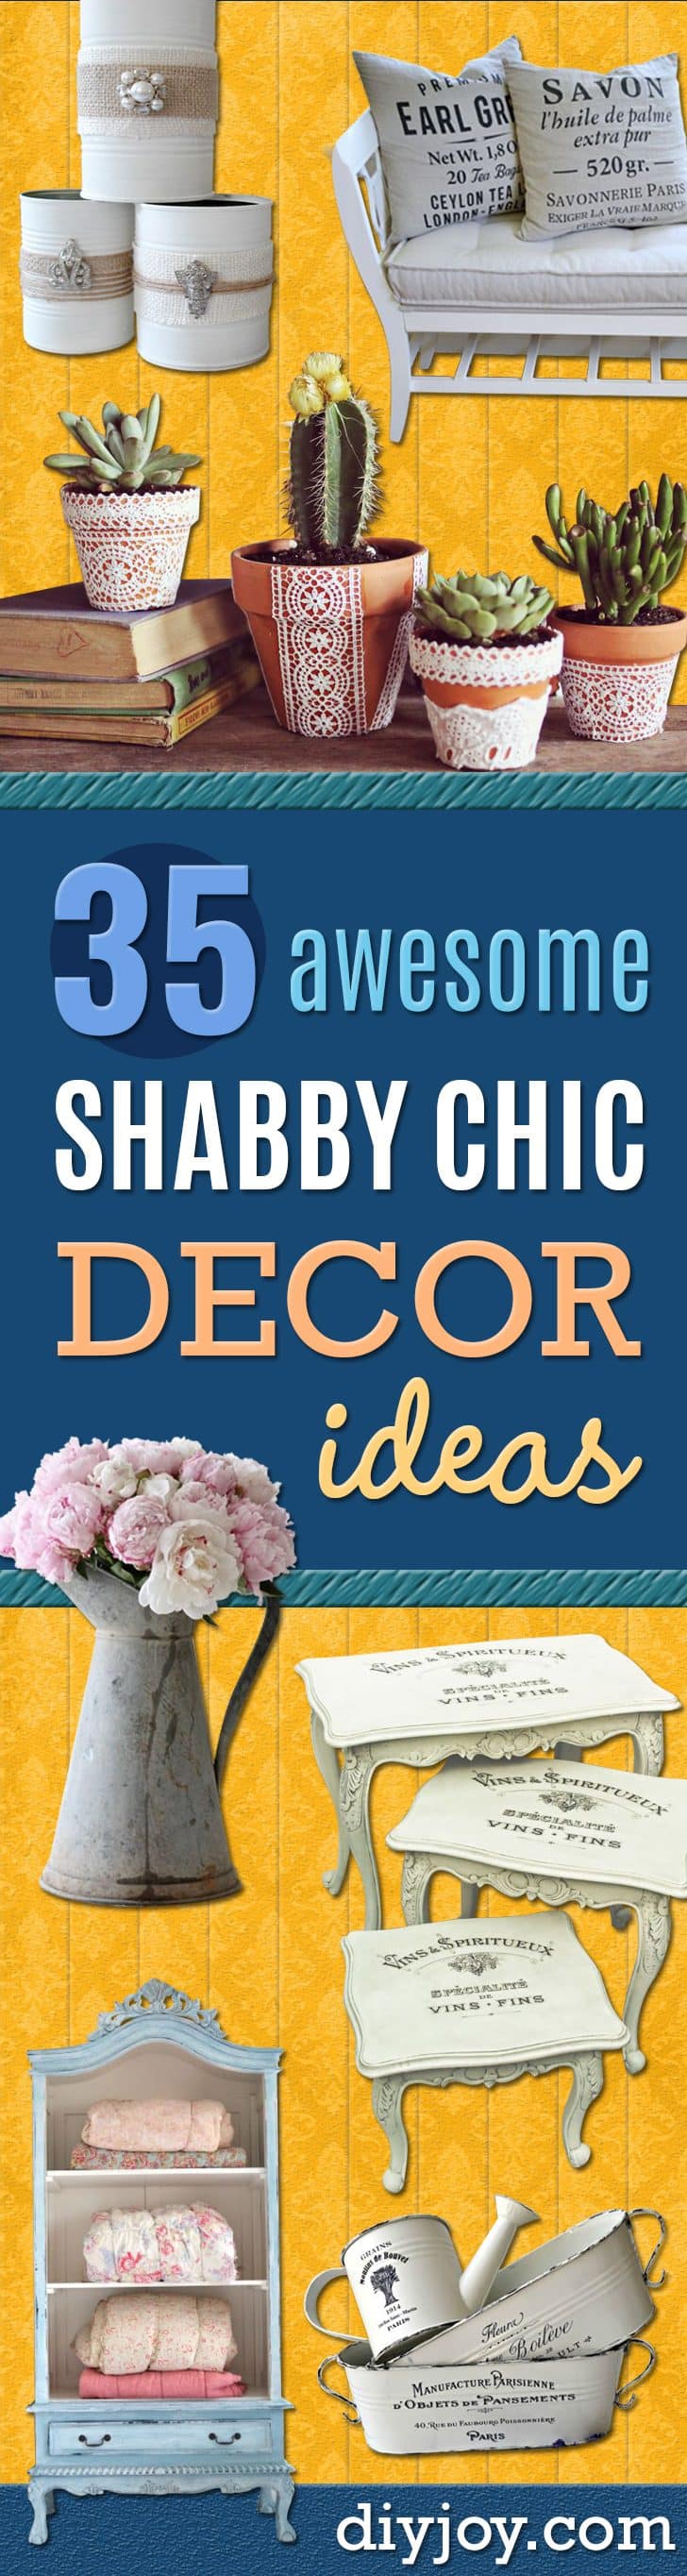 35 Shabby Chic Decor Ideas To DIY